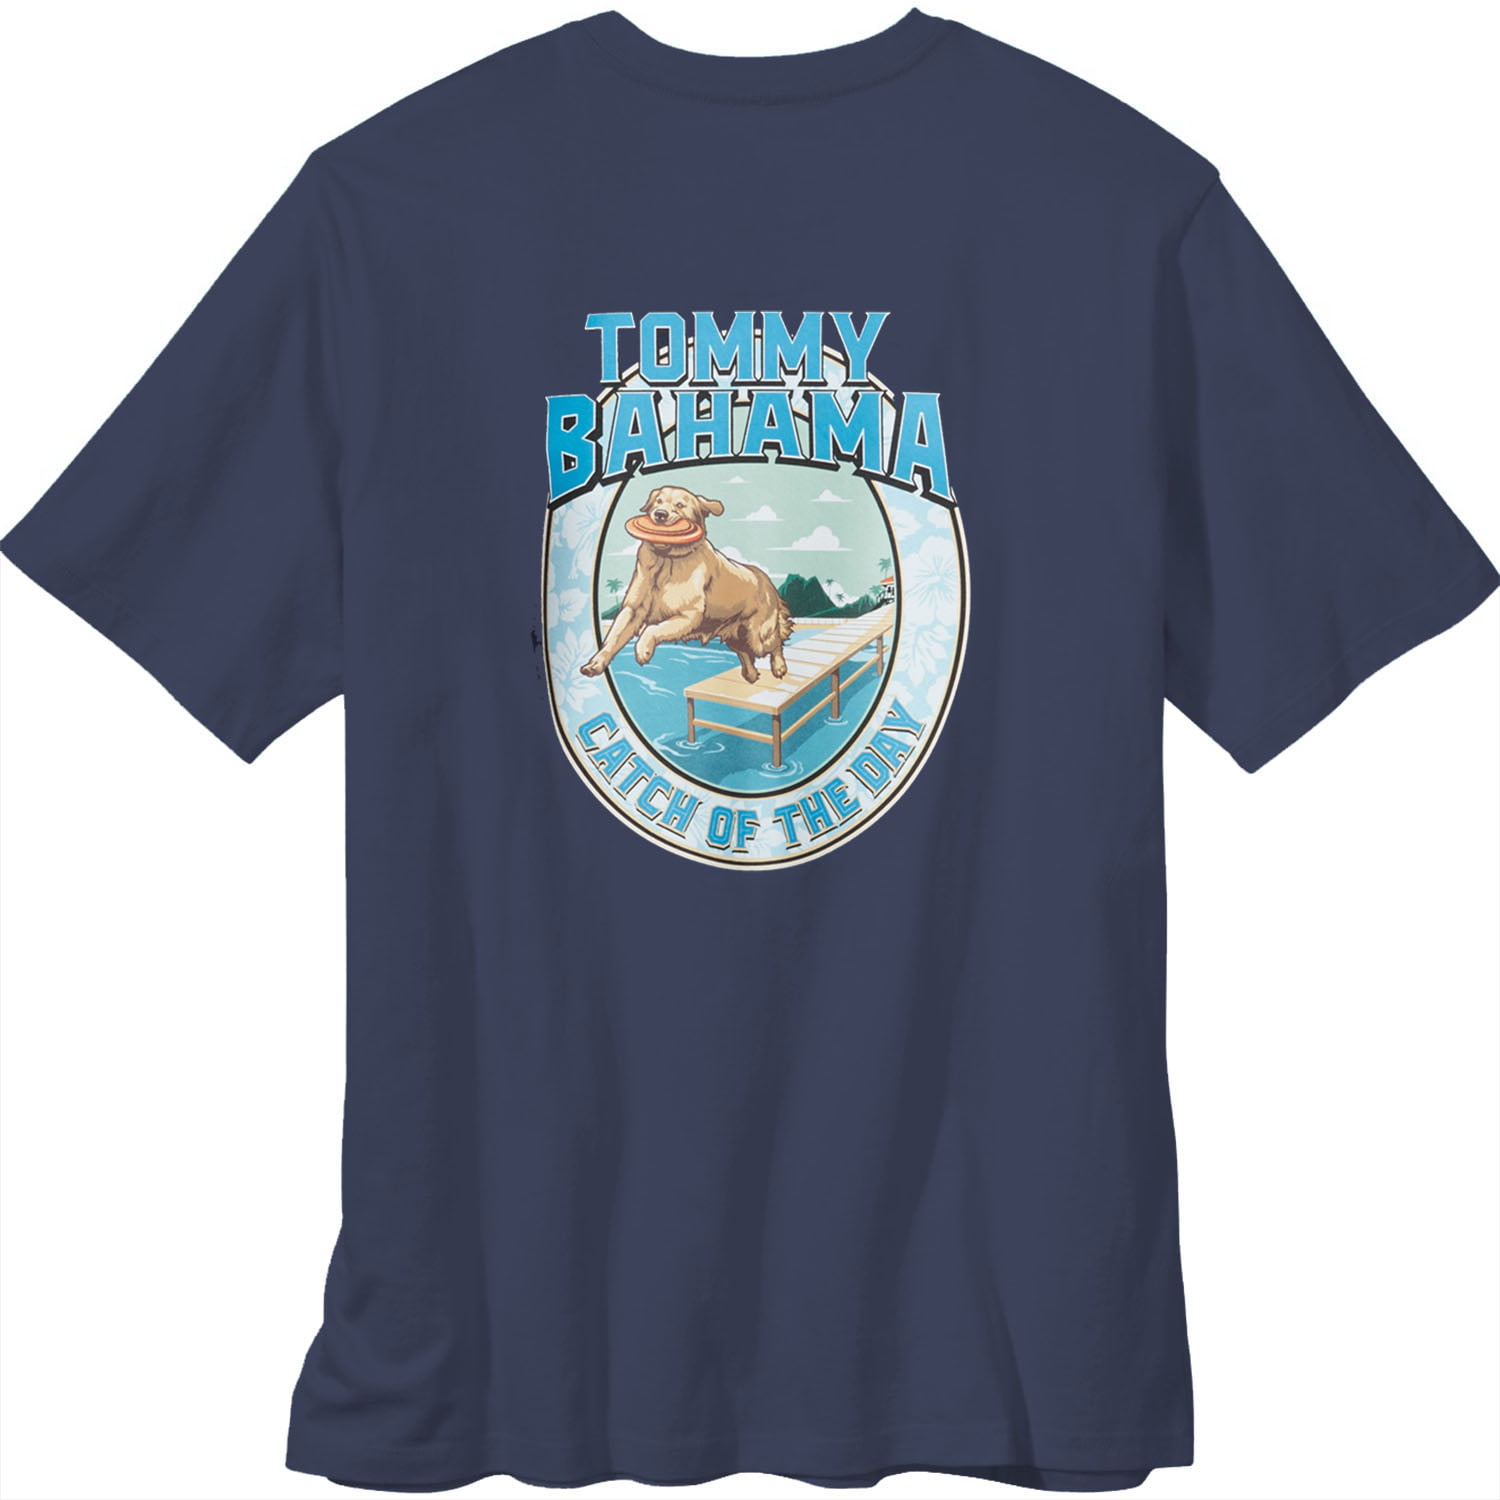 Tommy Bahama Shirt Size Chart